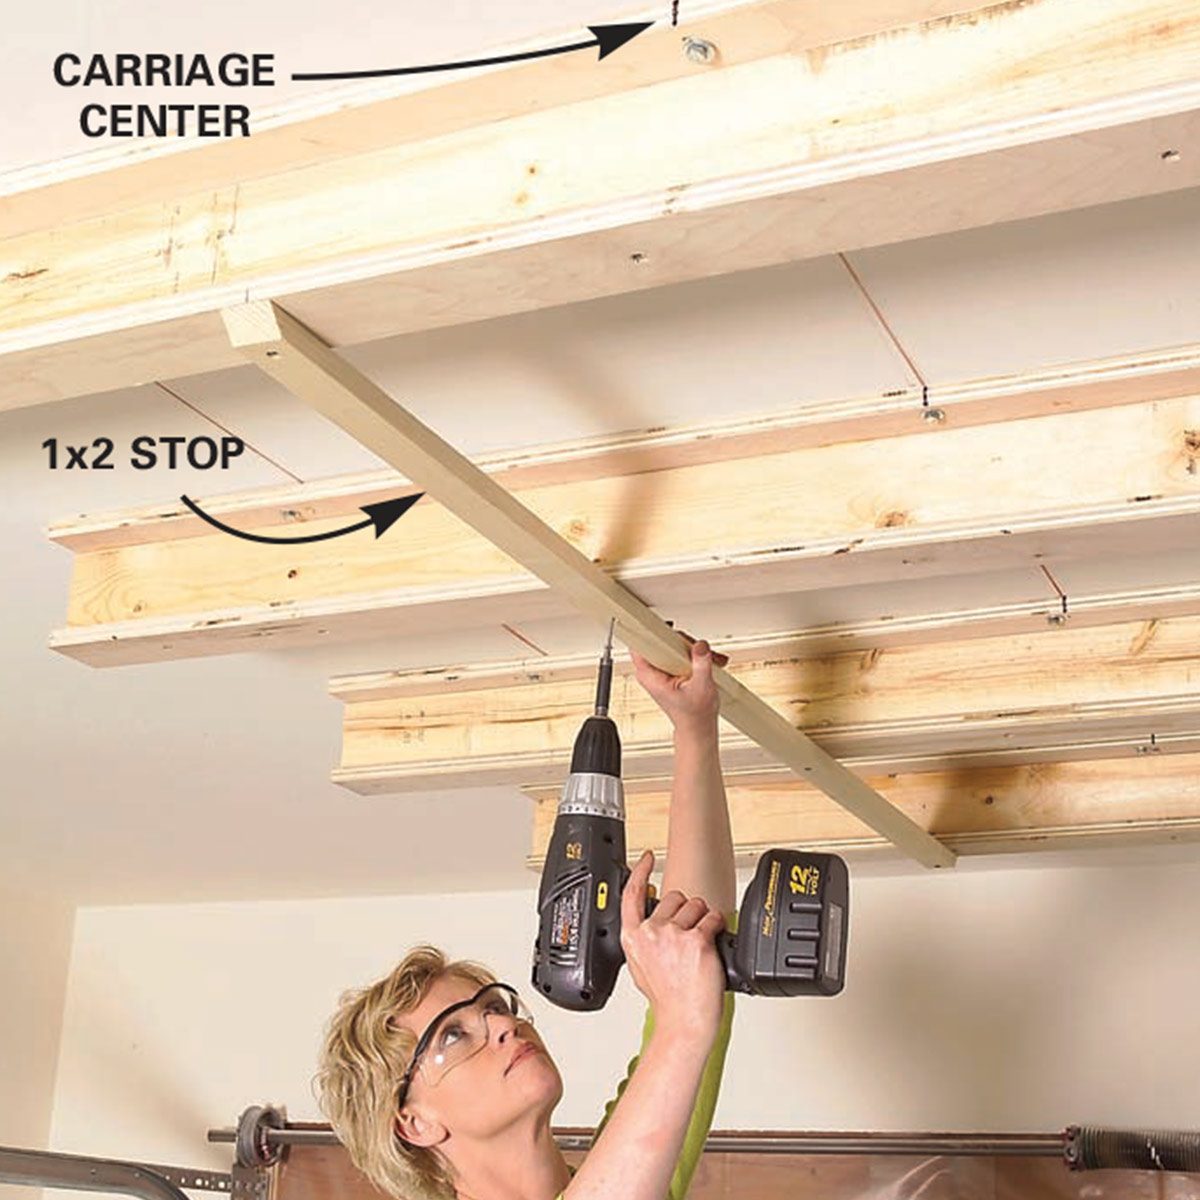 Overhead Garage Storage Diy - Overhead Hanging Storage : Diy garage storage ideas | source: